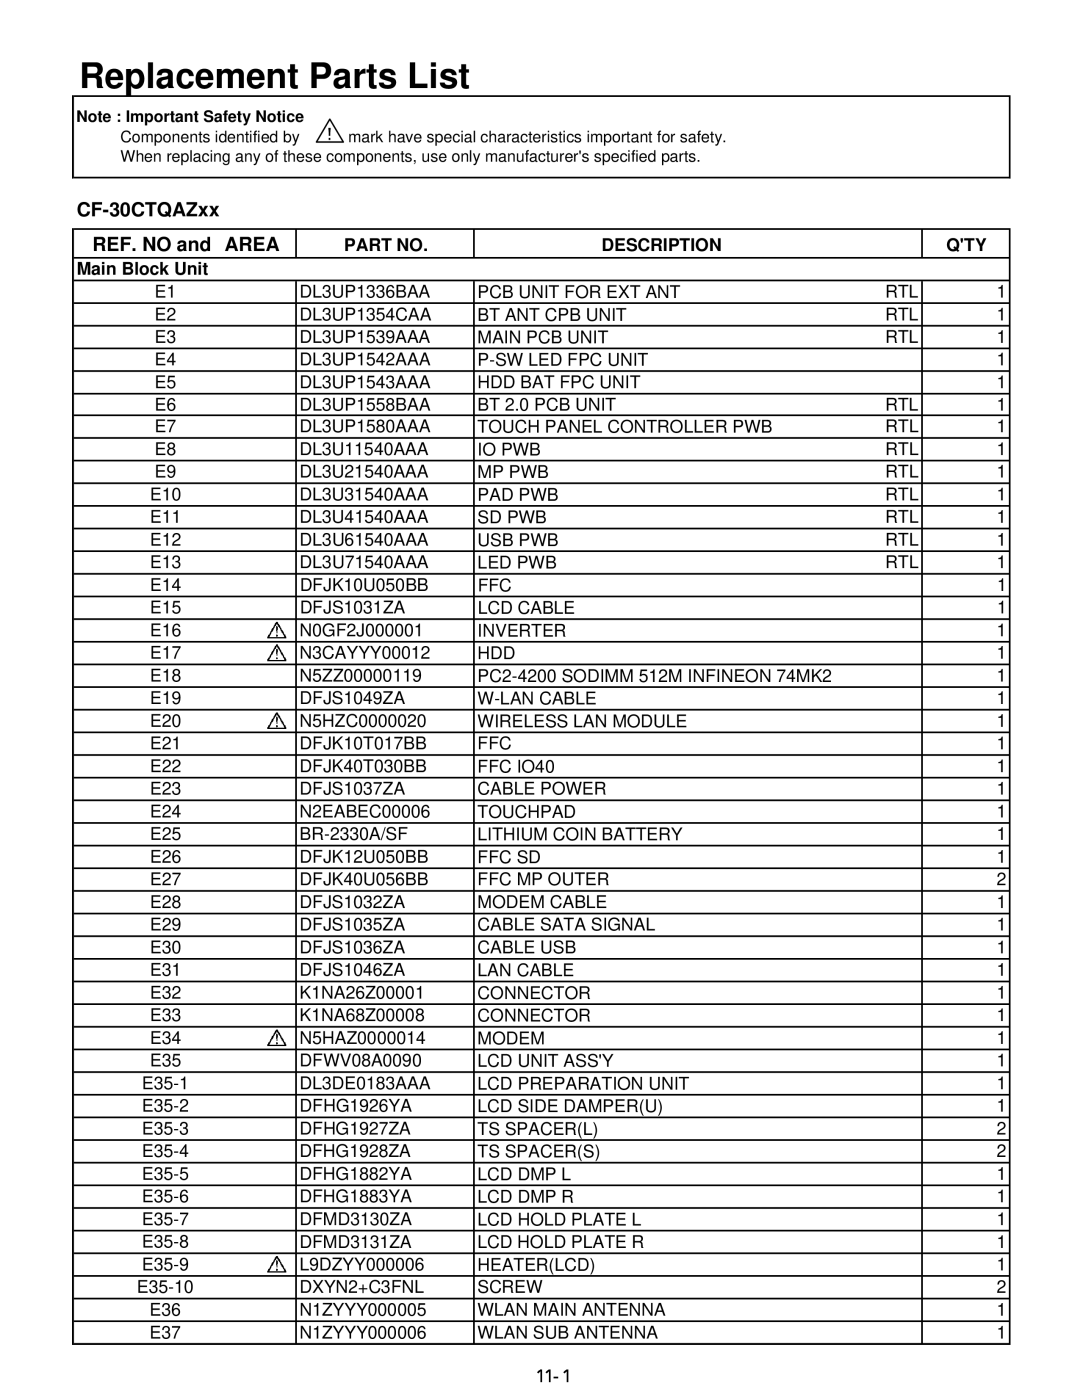 Matsushita service manual Replacement Parts List, CF-30CTQAZxx, REF. NO and AREA 